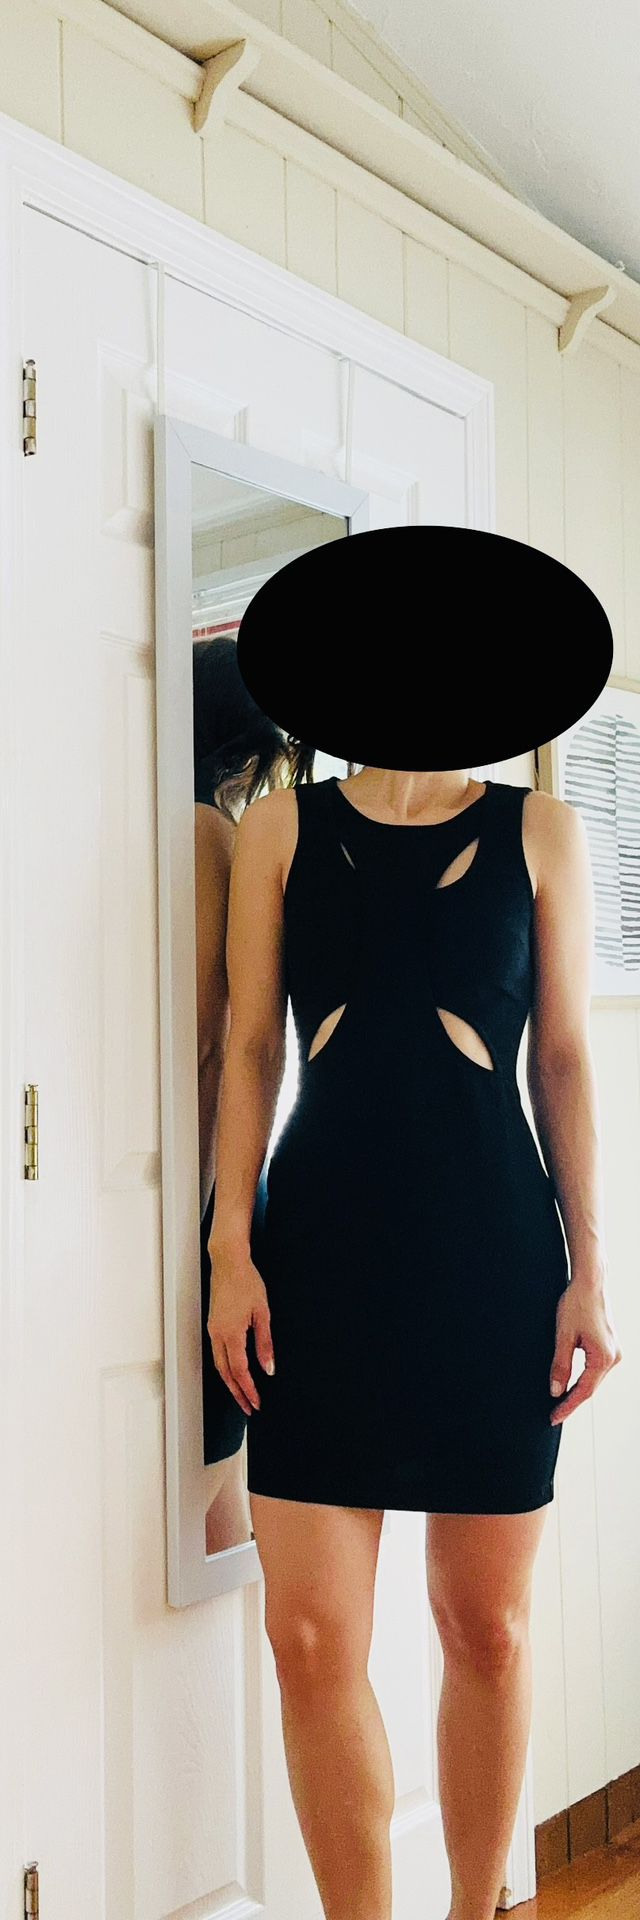 Cut Out Black Dress